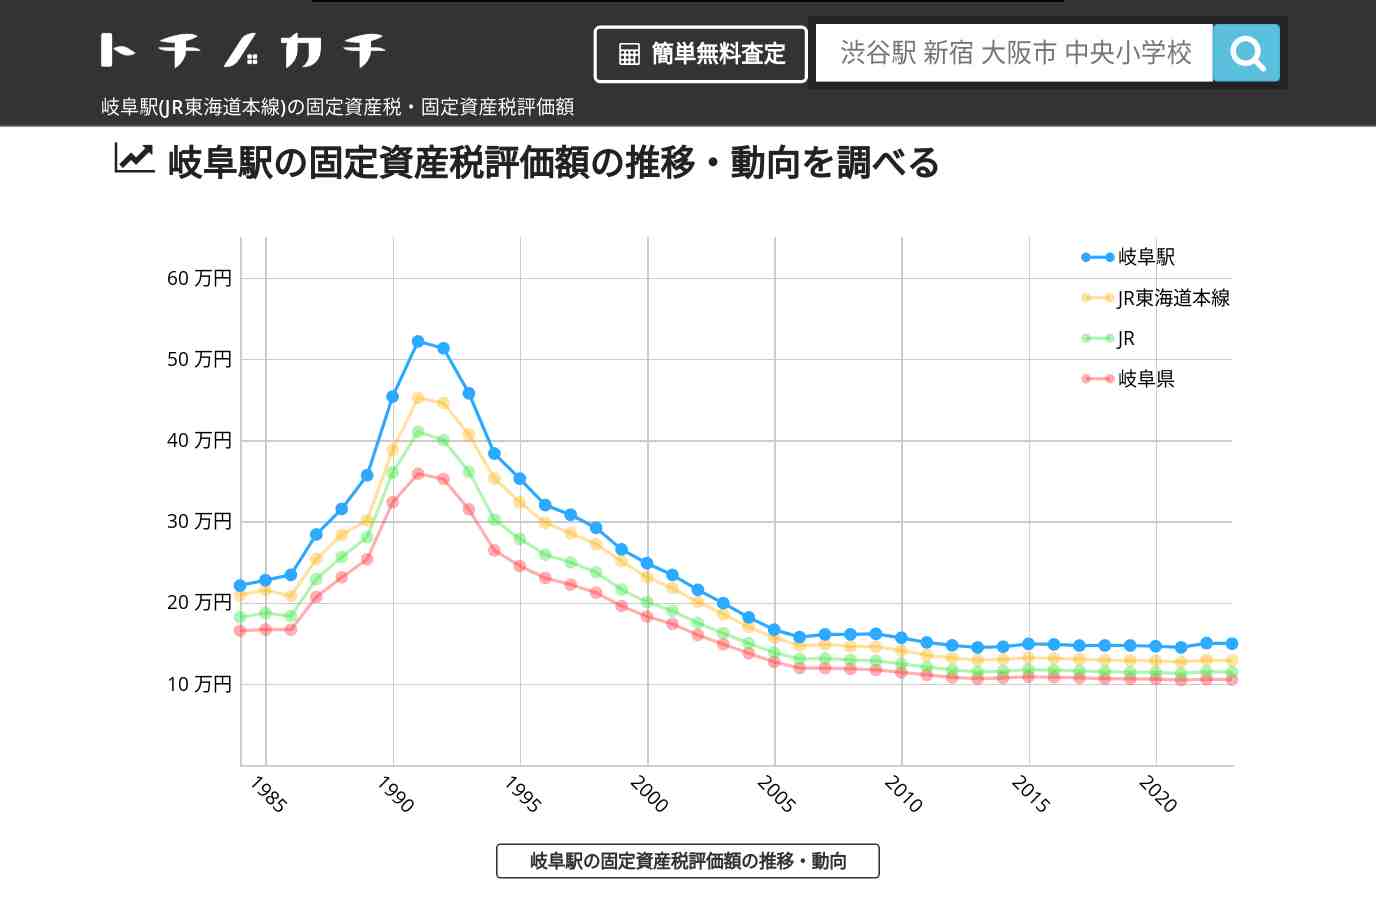 岐阜駅(JR東海道本線)の固定資産税・固定資産税評価額 | トチノカチ